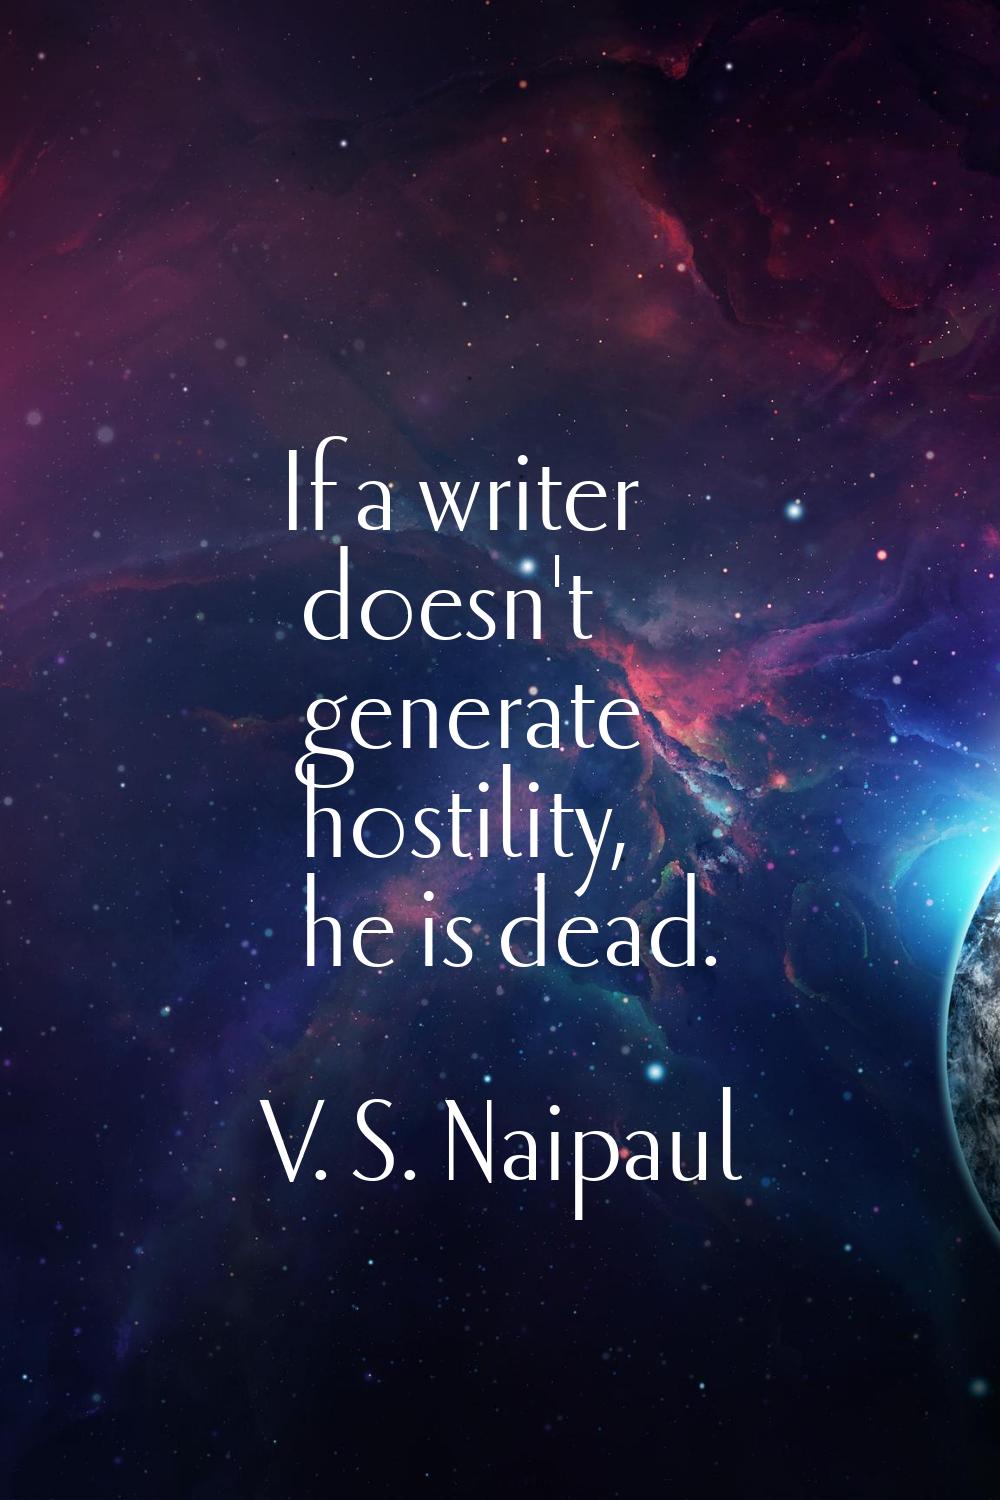 If a writer doesn't generate hostility, he is dead.